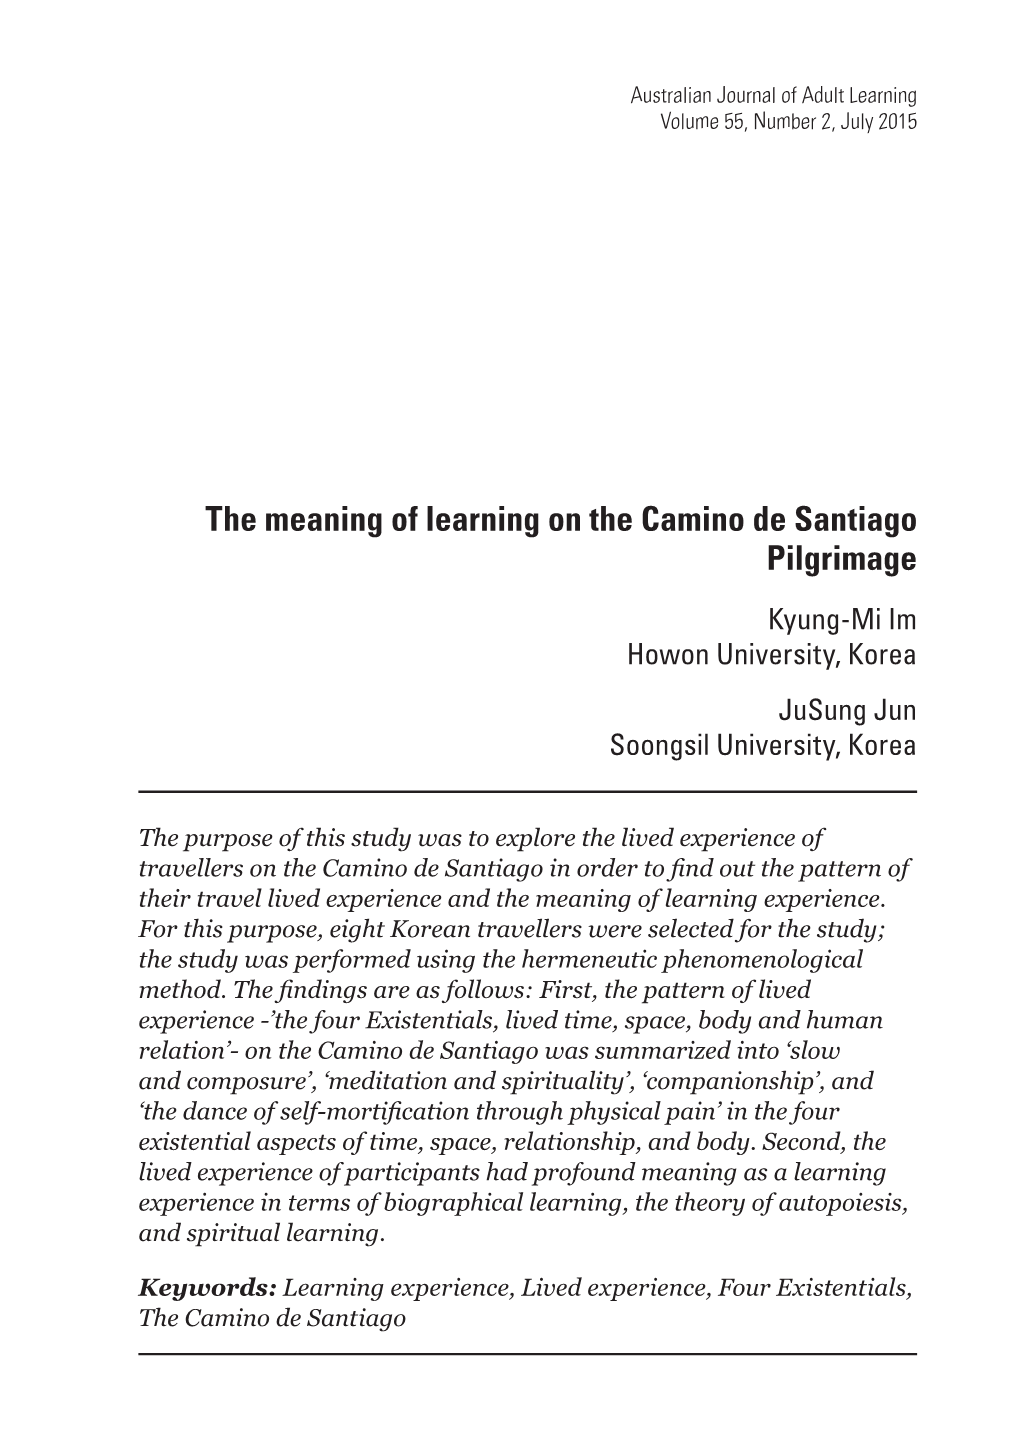 The Meaning of Learning on the Camino De Santiago Pilgrimage Kyung-Mi Im Howon University, Korea Jusung Jun Soongsil University, Korea